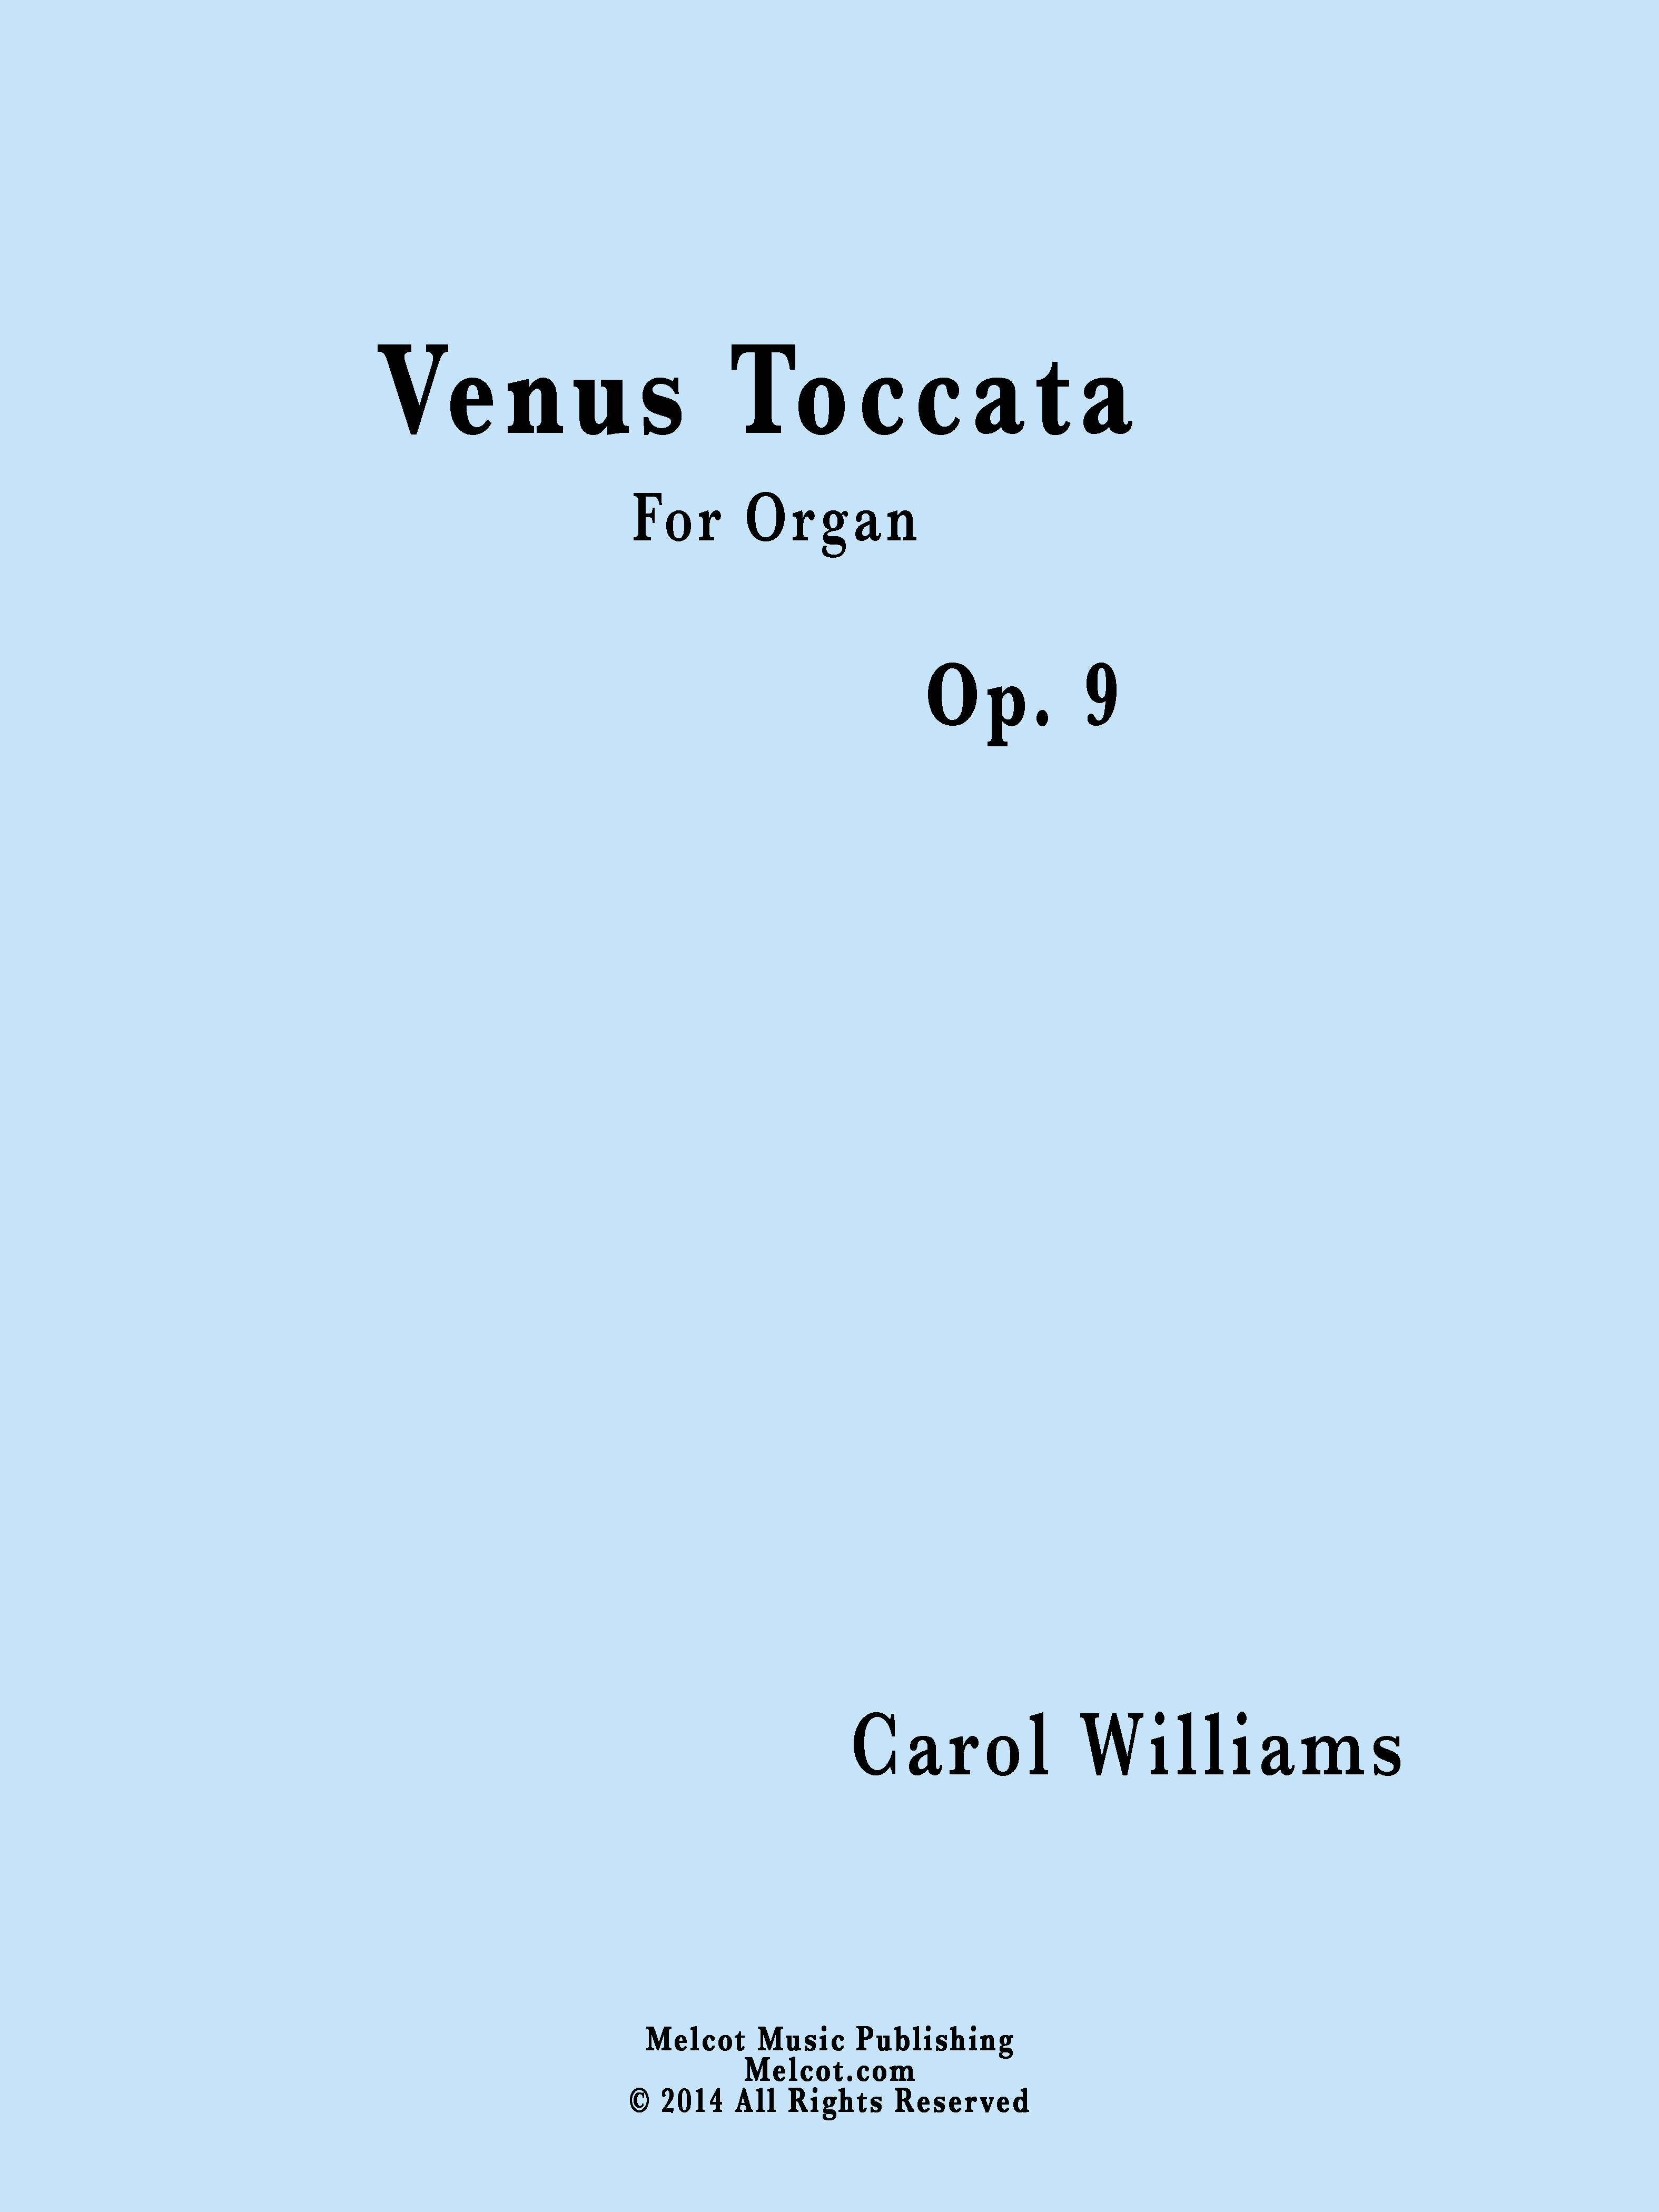 Venus Toccata by Carol
                                Williams